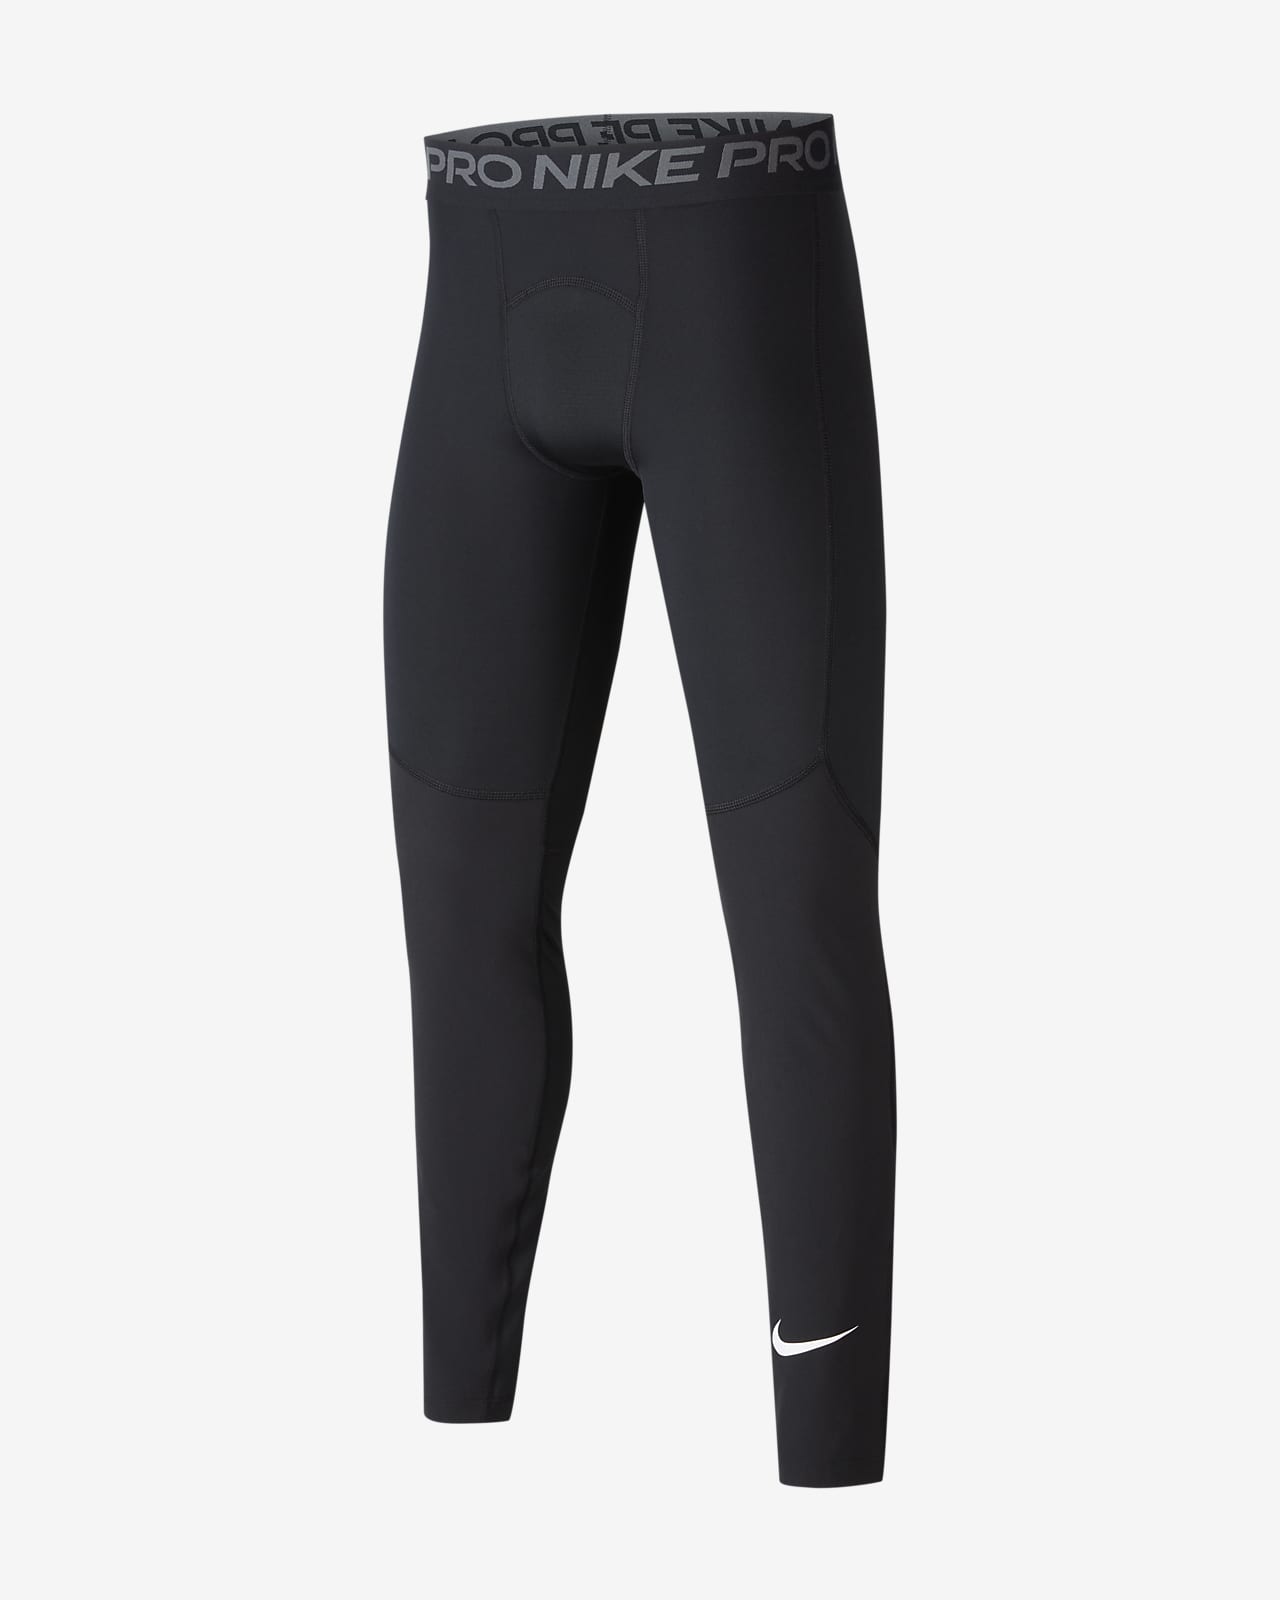 nike pro grey and black leggings